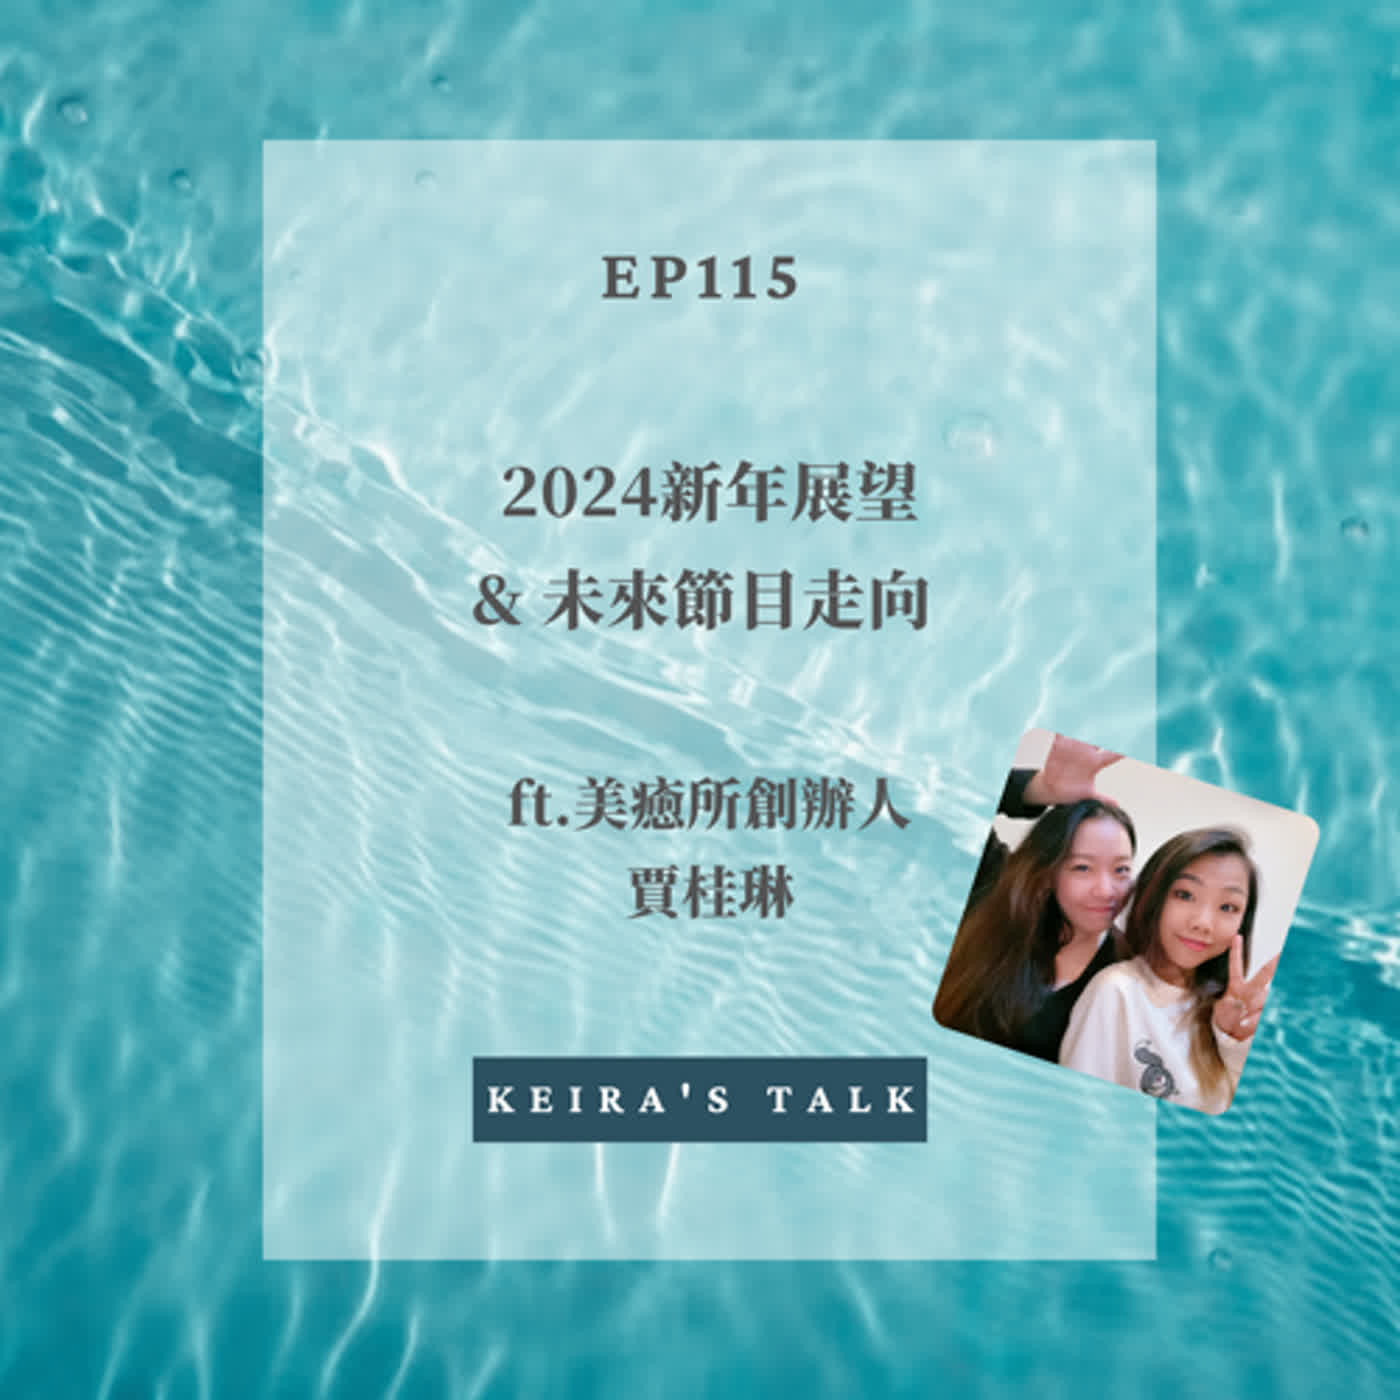 EP115. 2024新年展望&未來節目走向 ft.美癒所賈桂琳